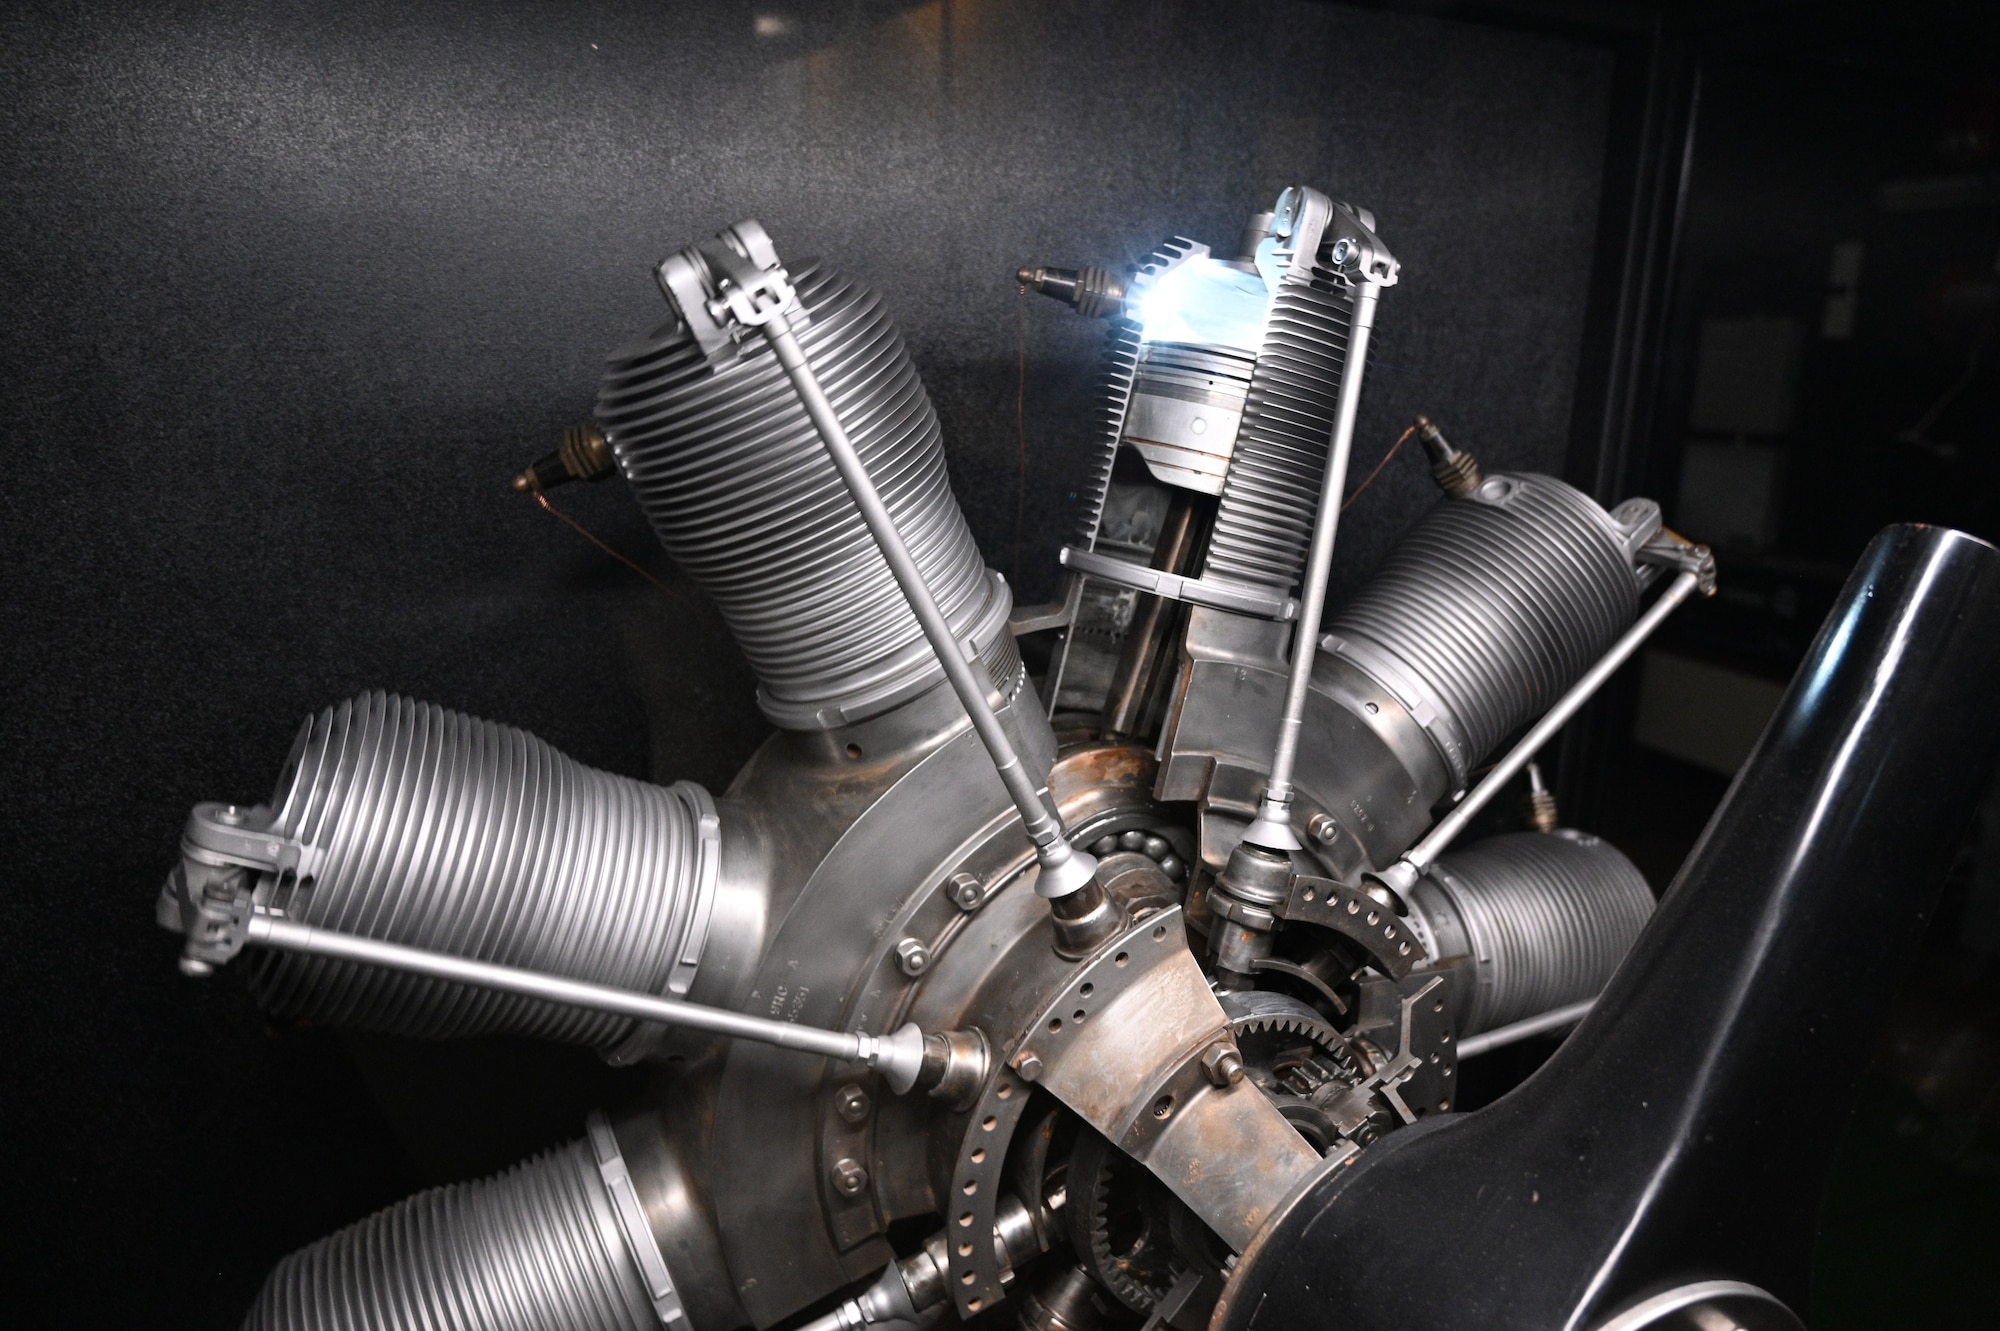 Gnome N-9 rotary engine